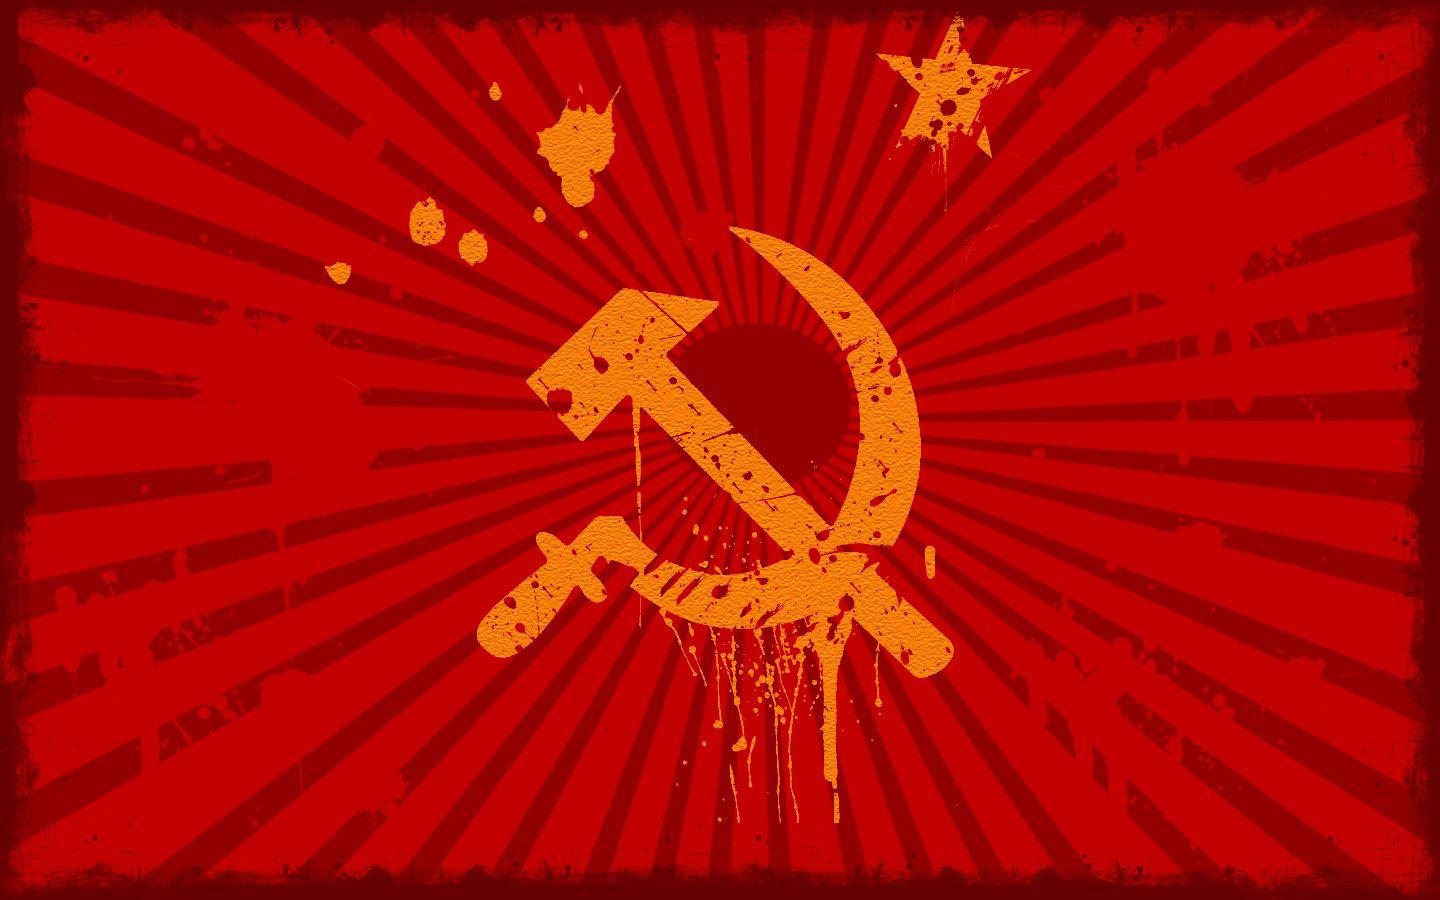 soviet background 4. Background Check All